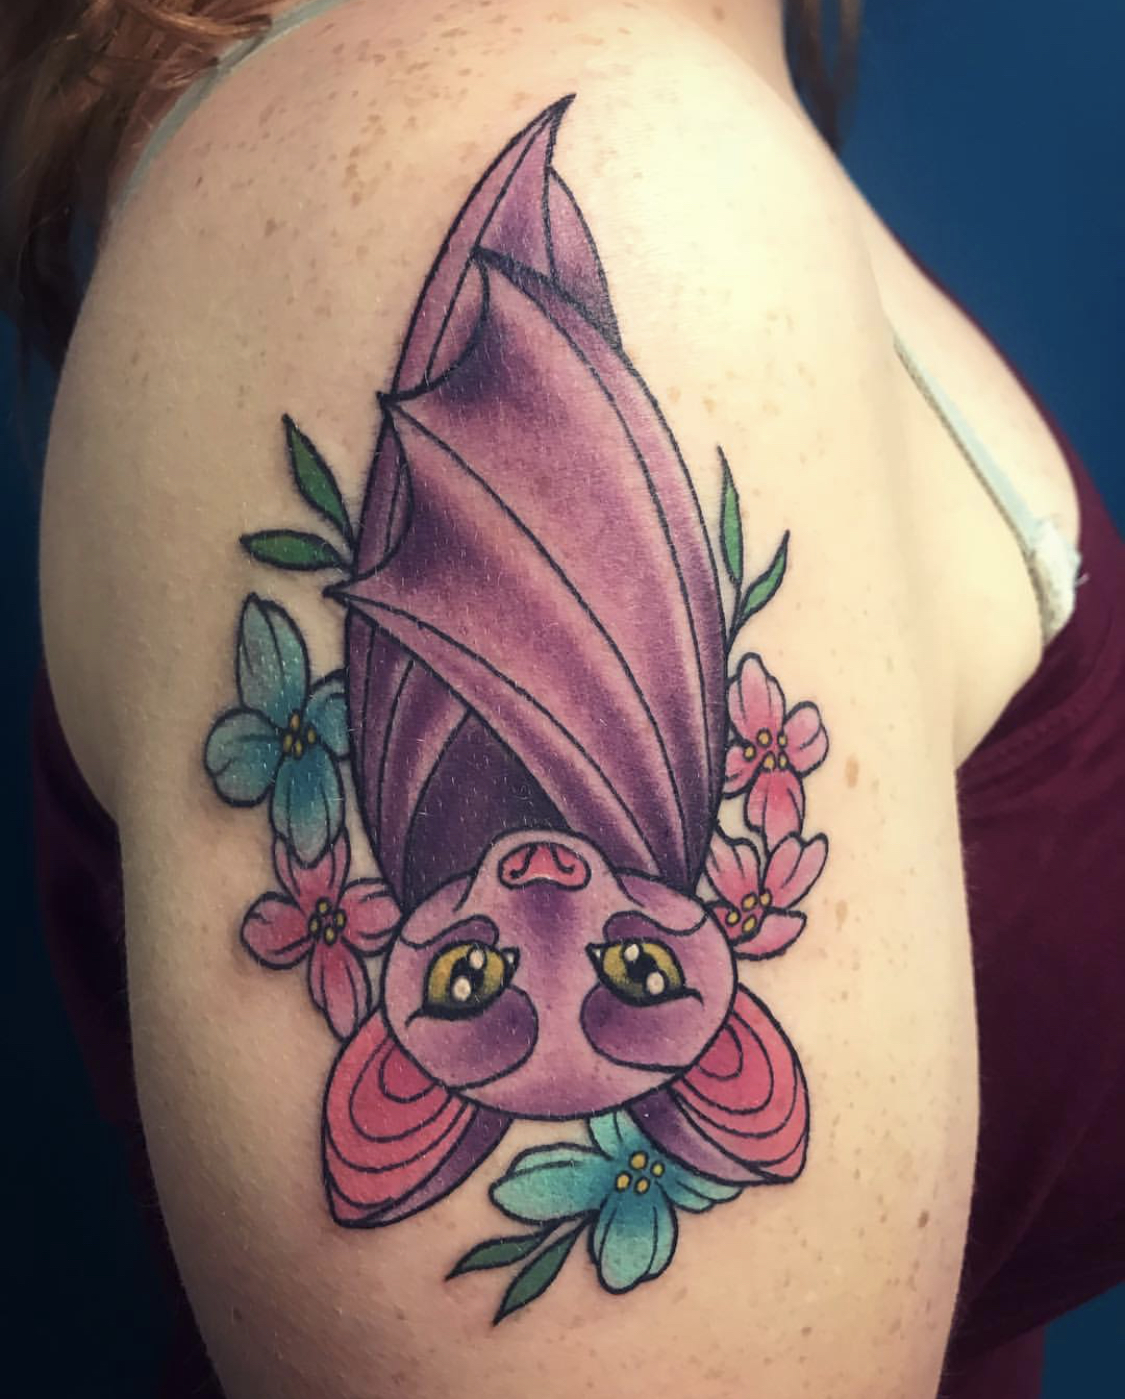 Colorful bat tattoo